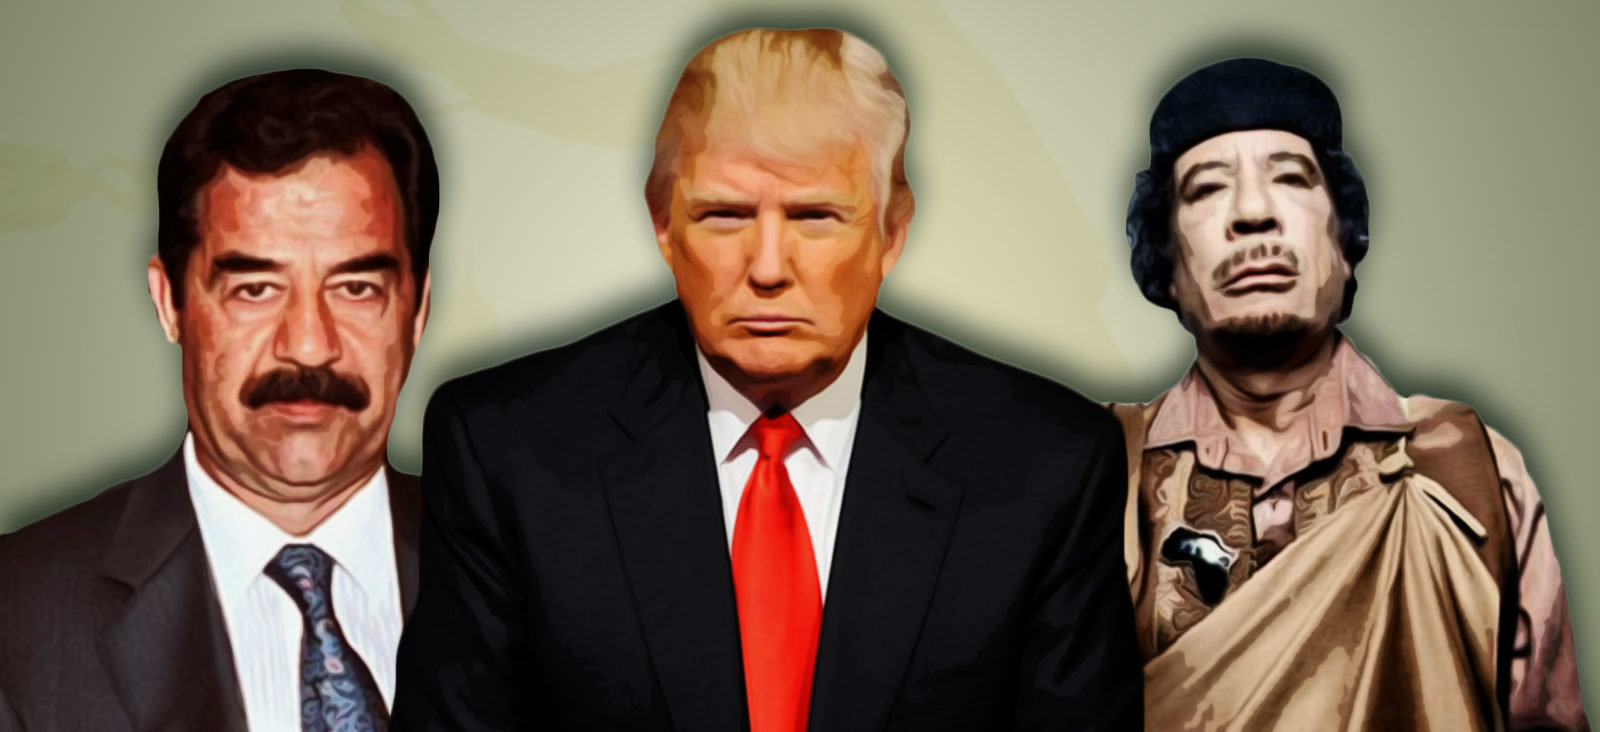 Hussein,Trump,Gaddafi graphic